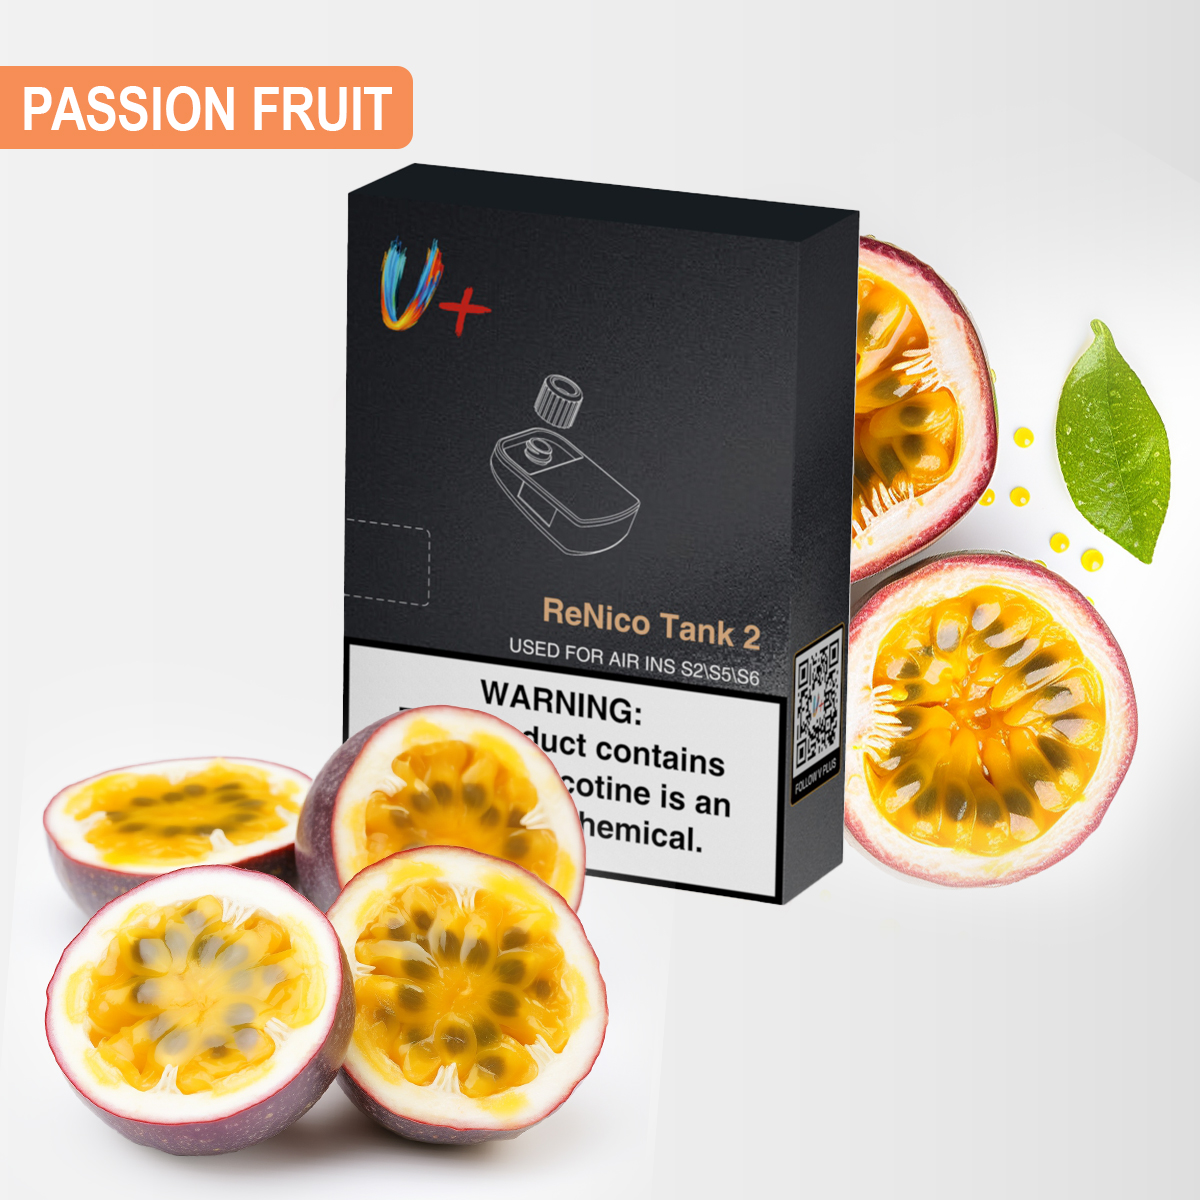 V PLUS Tank Passion Fruit s2/s5